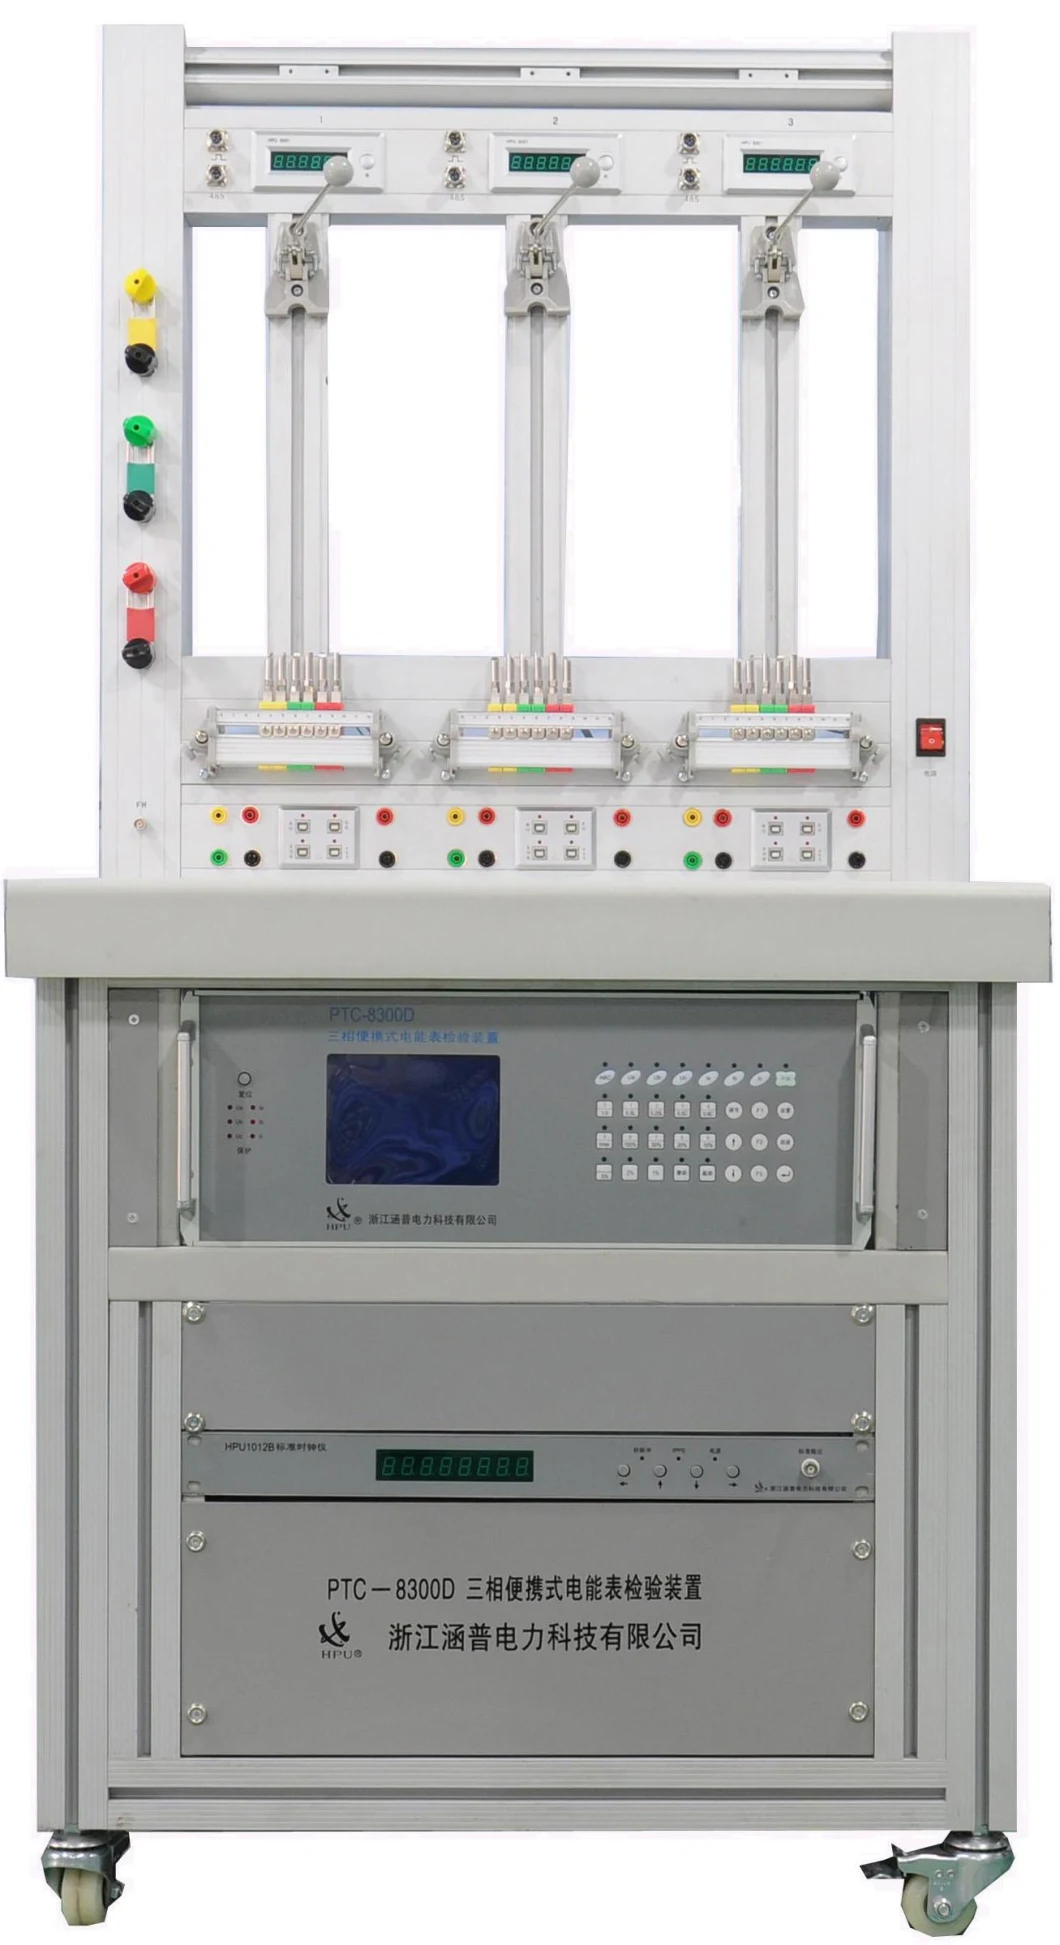 Three Phase portable Energy Meter Test Equipment (PTC-8300D)